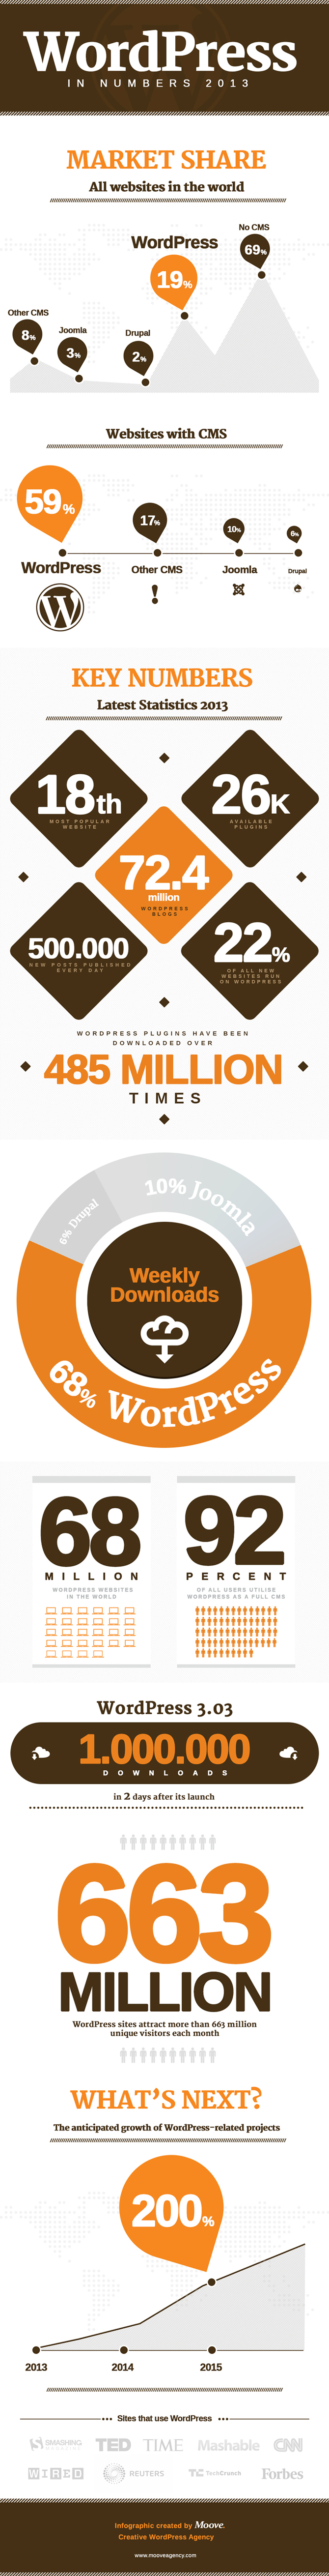 WordPress in Numbers